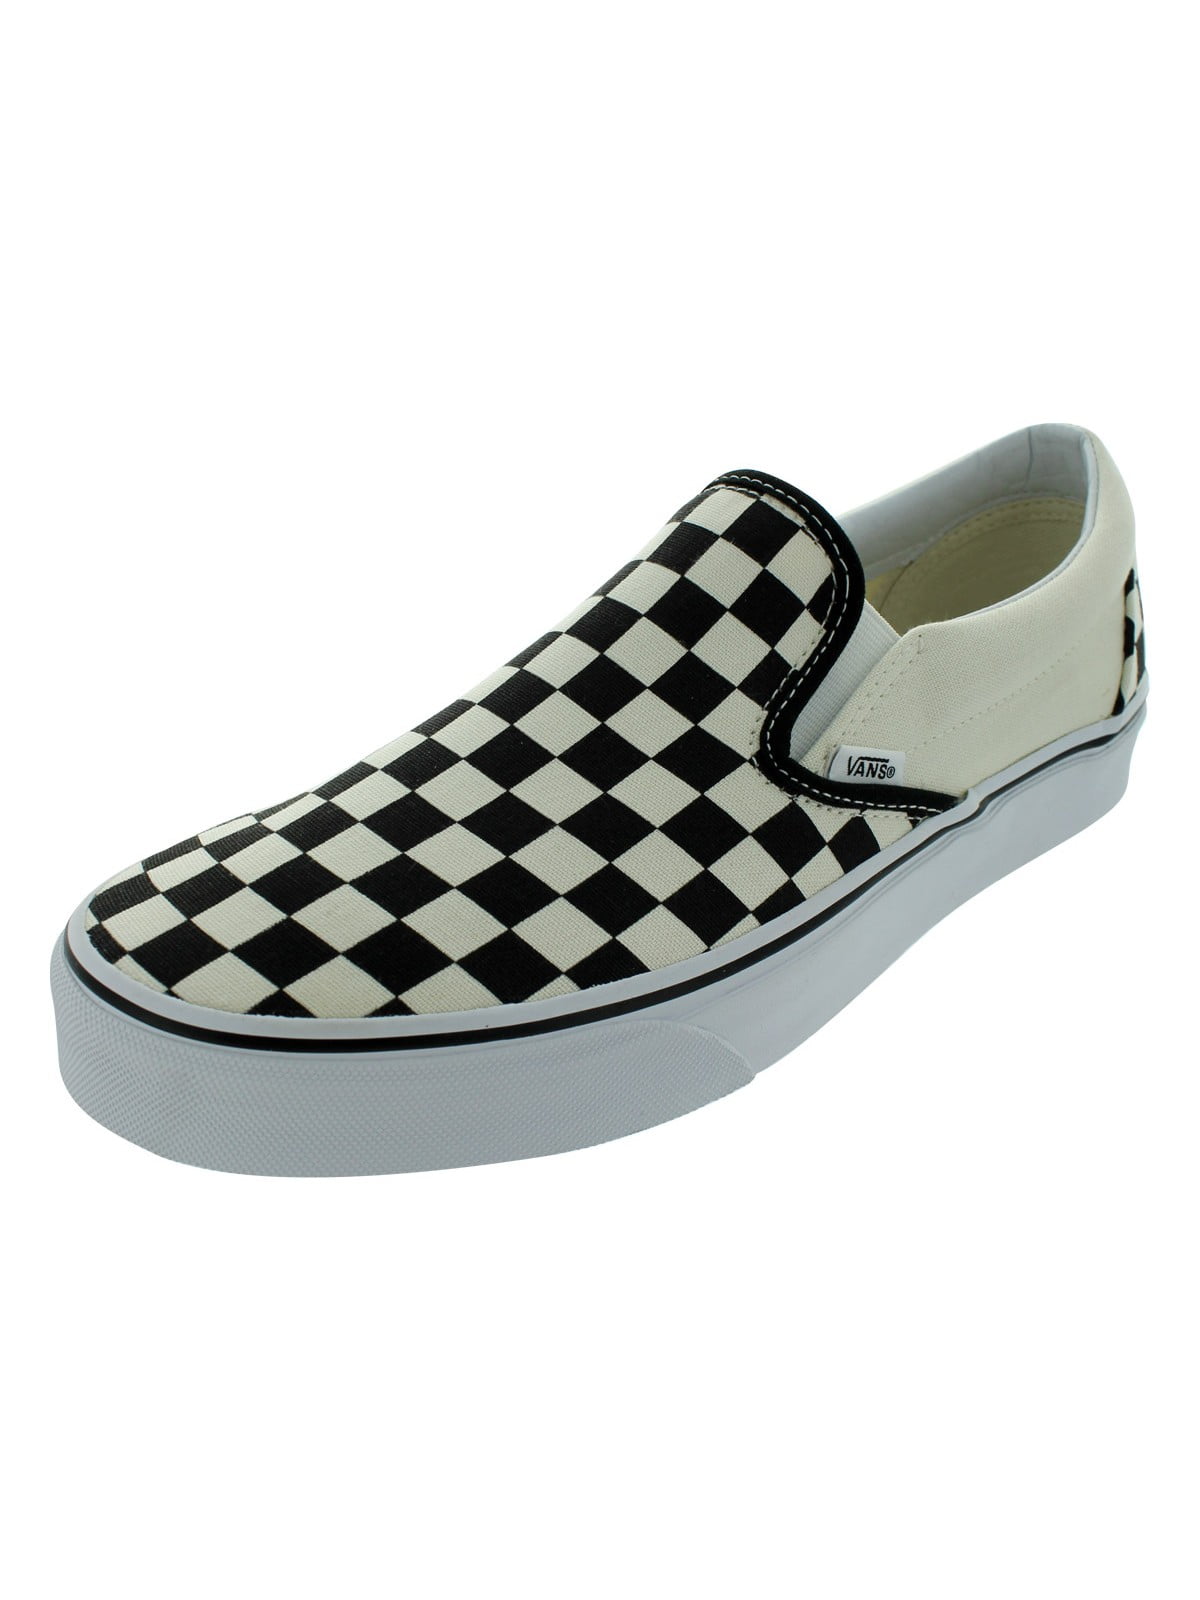 checkered shoes walmart